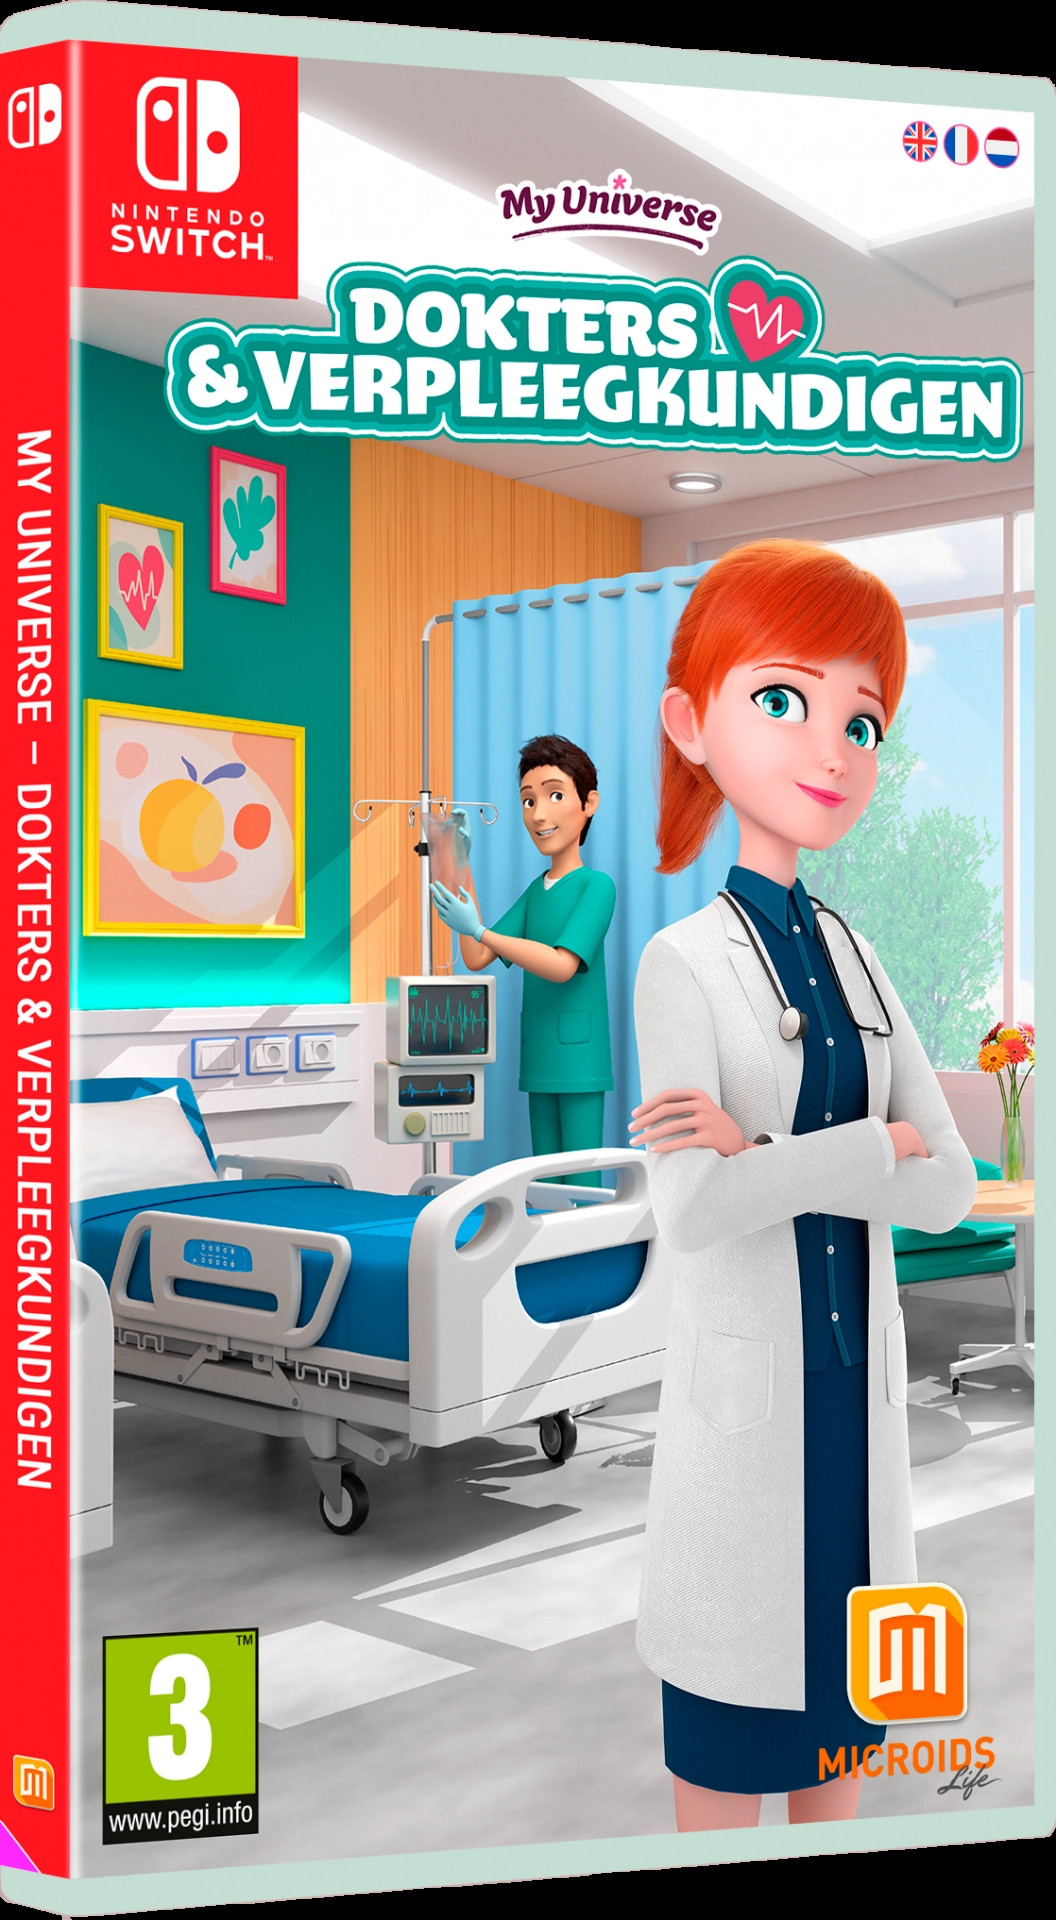 My Universe: Dokters & Verpleegkundigen - Nintendo Switch